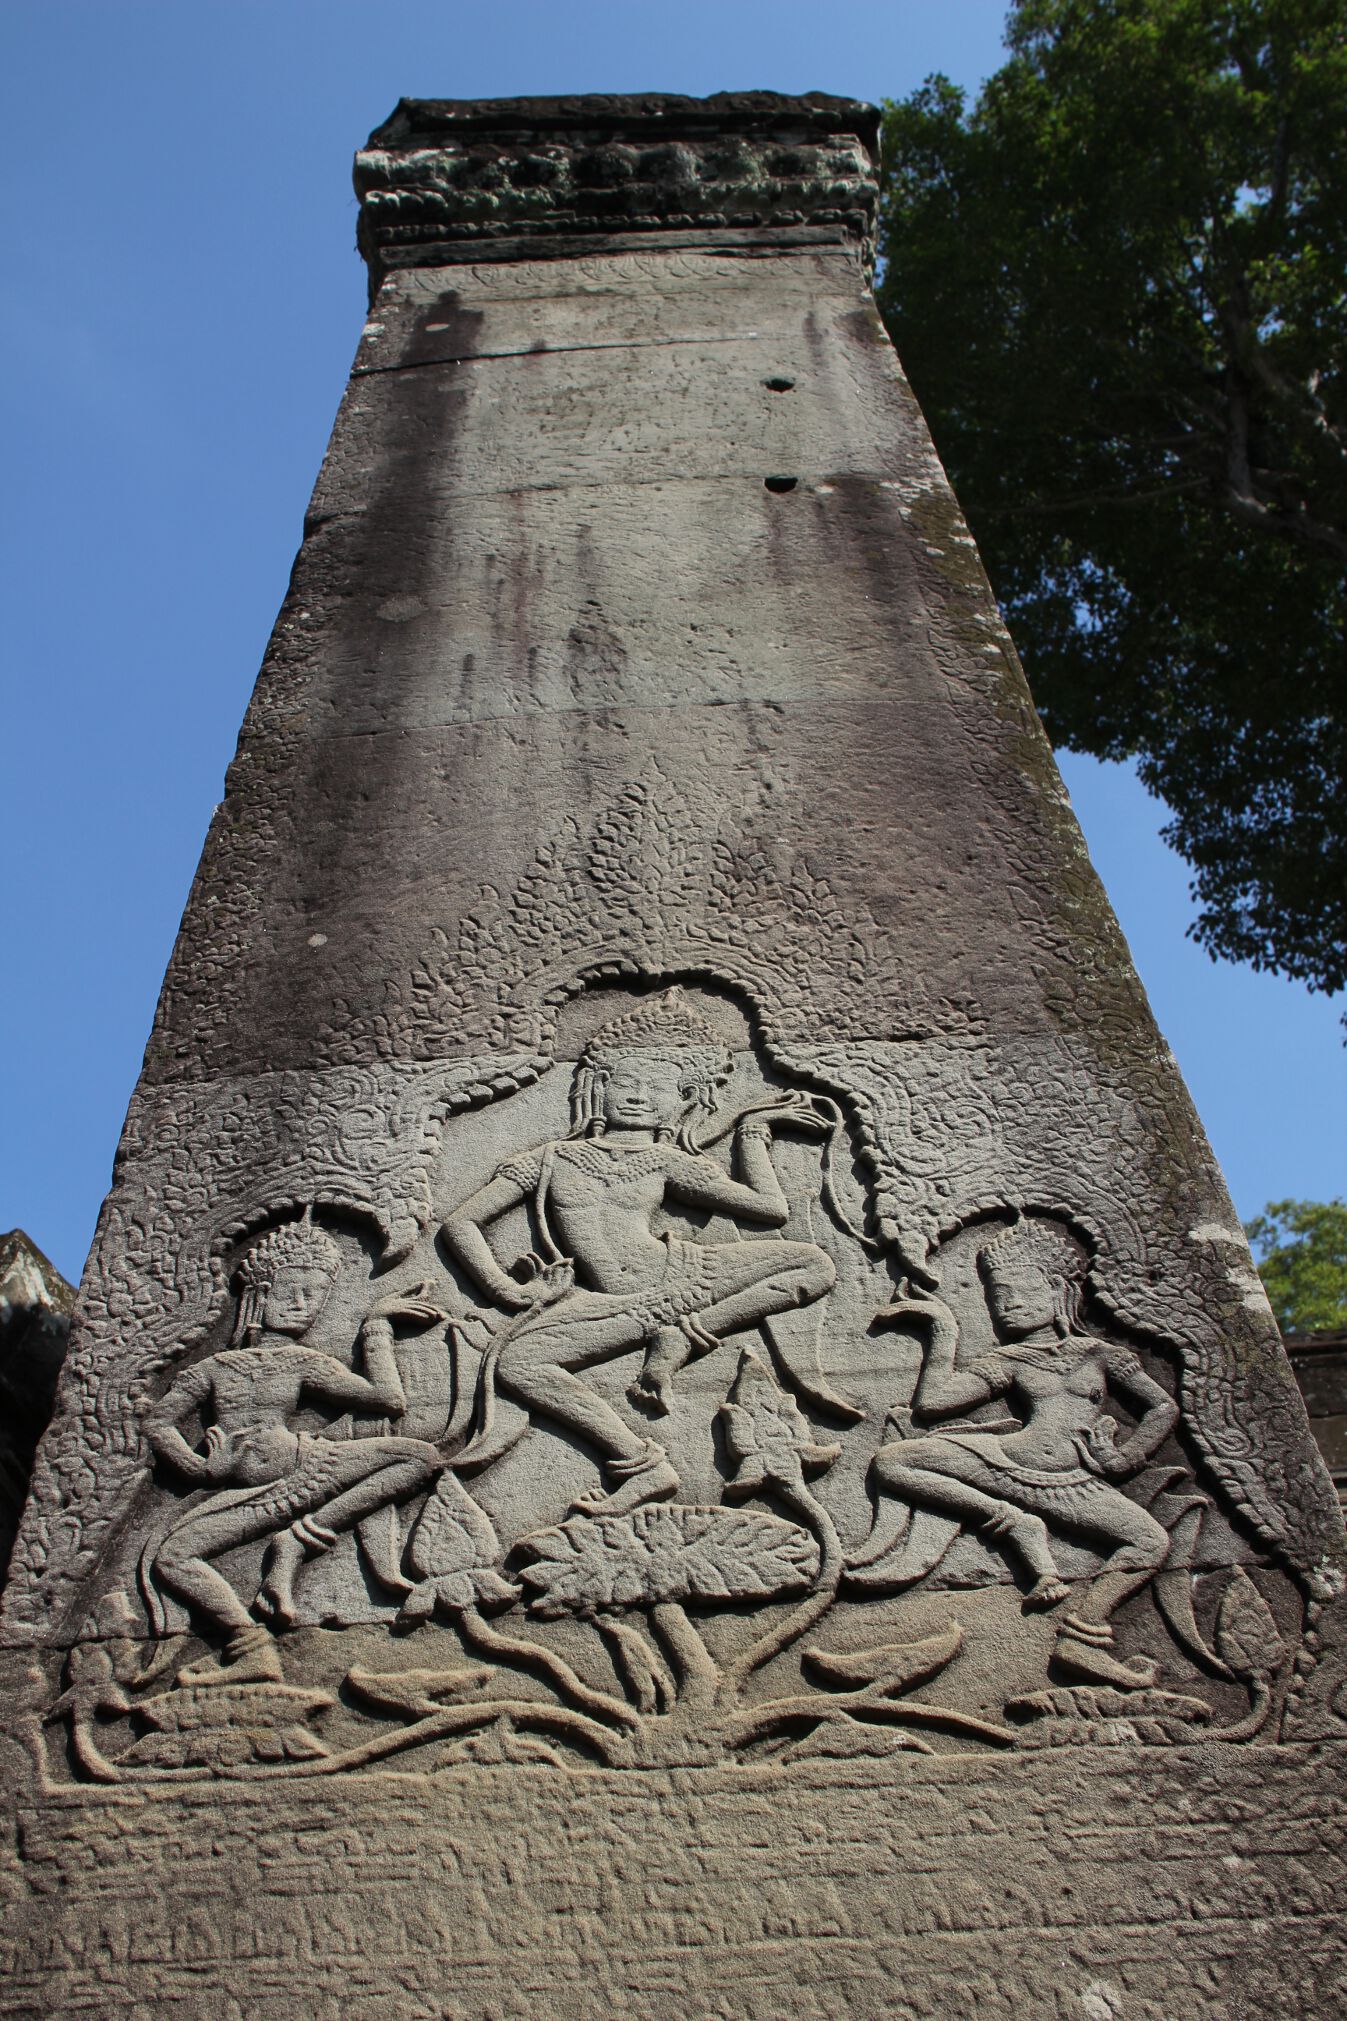 Apsara dancers adorn the walls of Bayon in Angkor Thom.